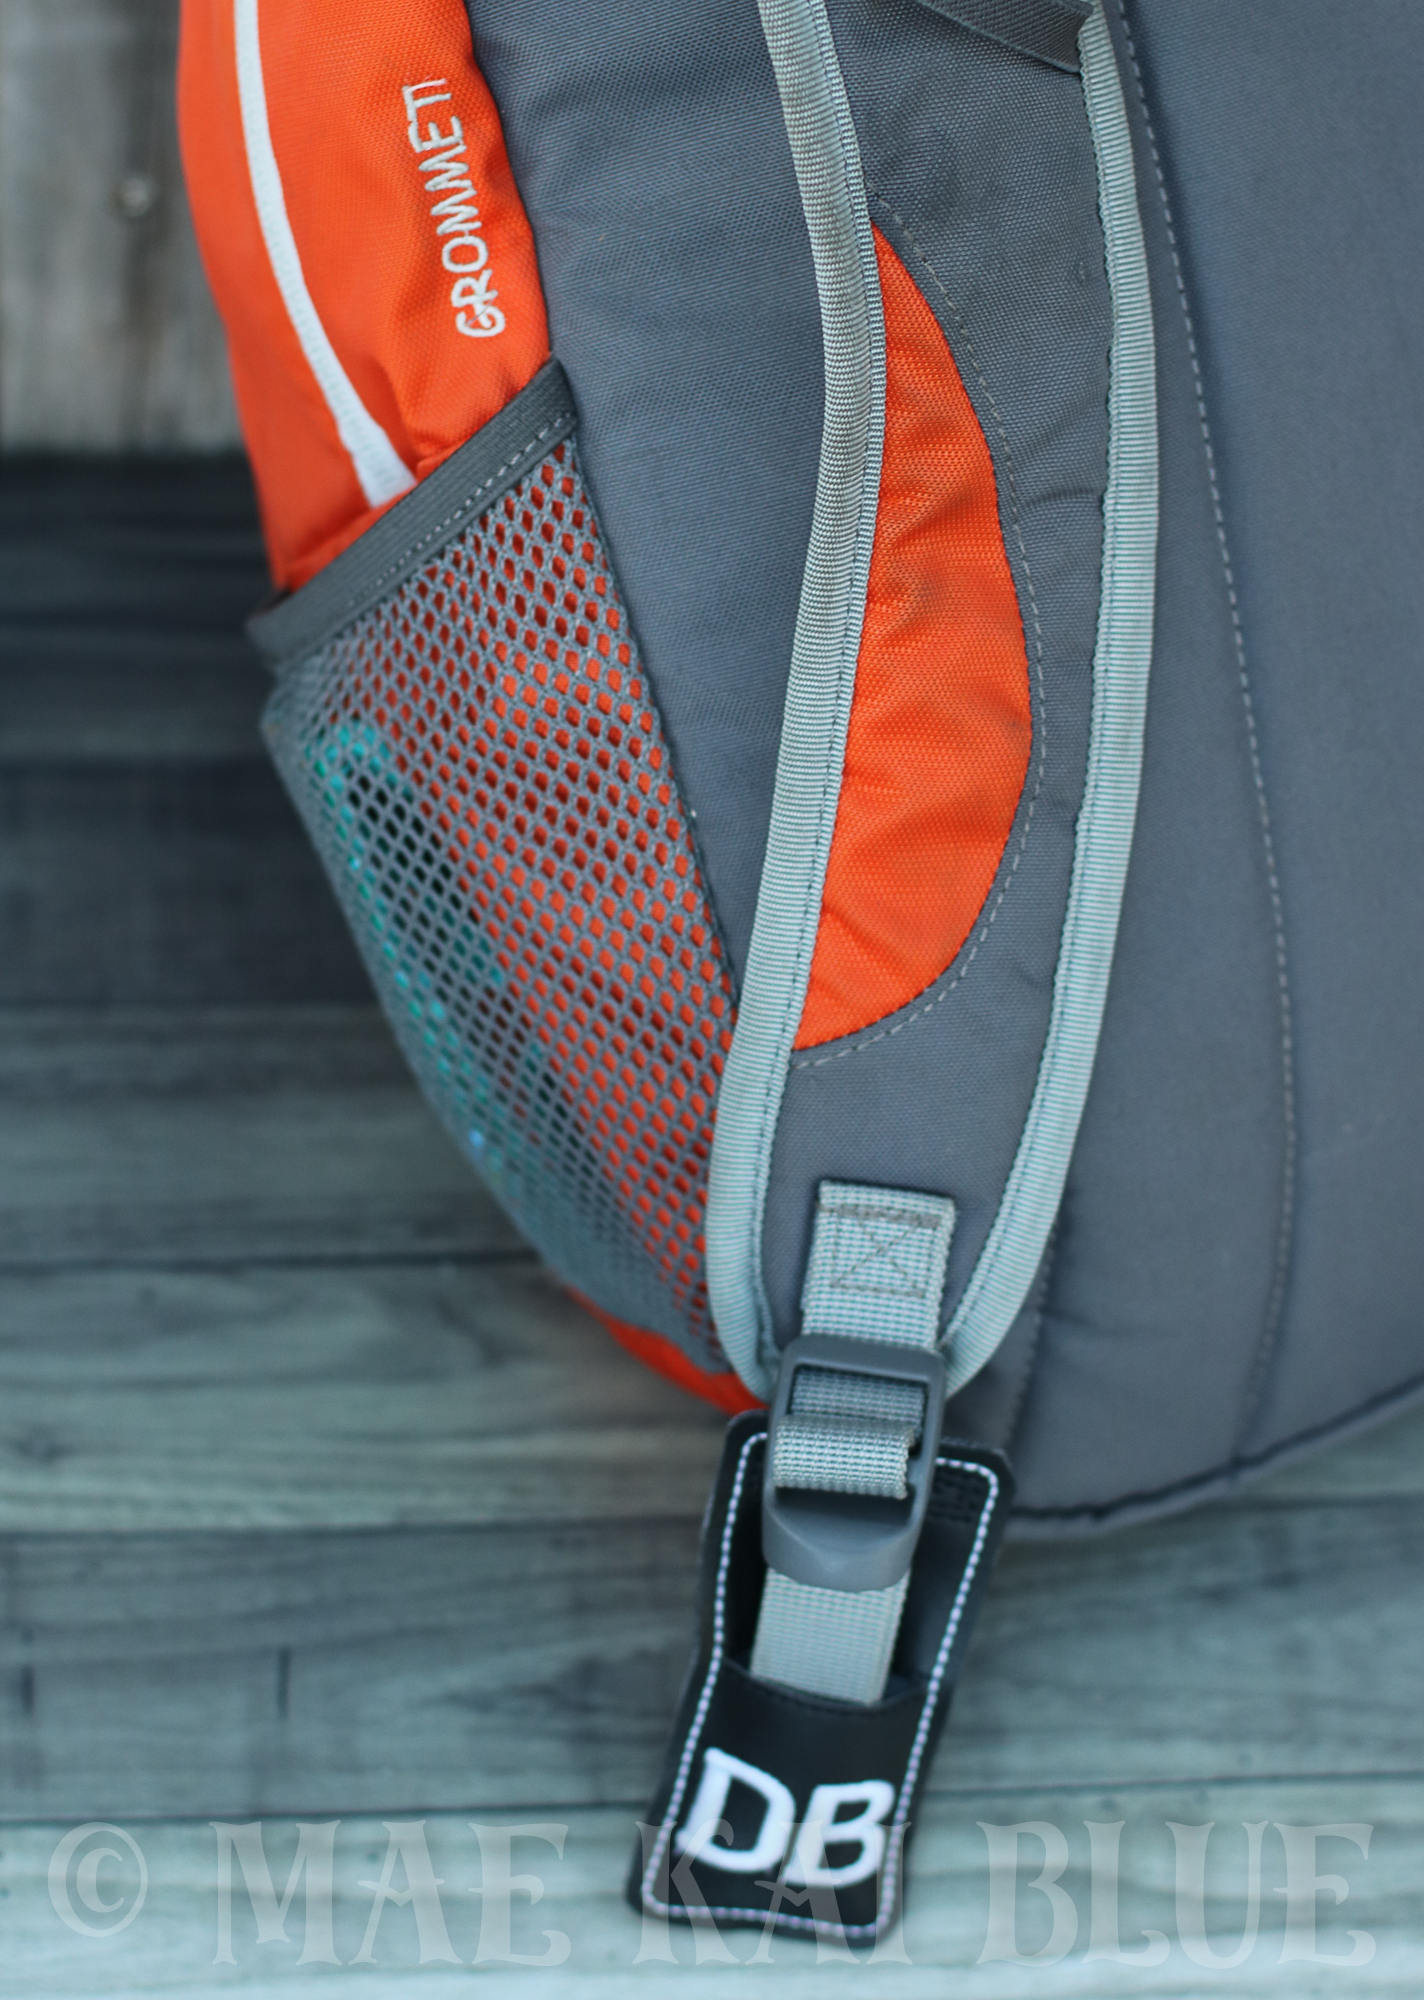 Backpack Strap Tamer Pocket Strap Keeper Back-to-school Backpack Organizer  Personalized Monogrammed 